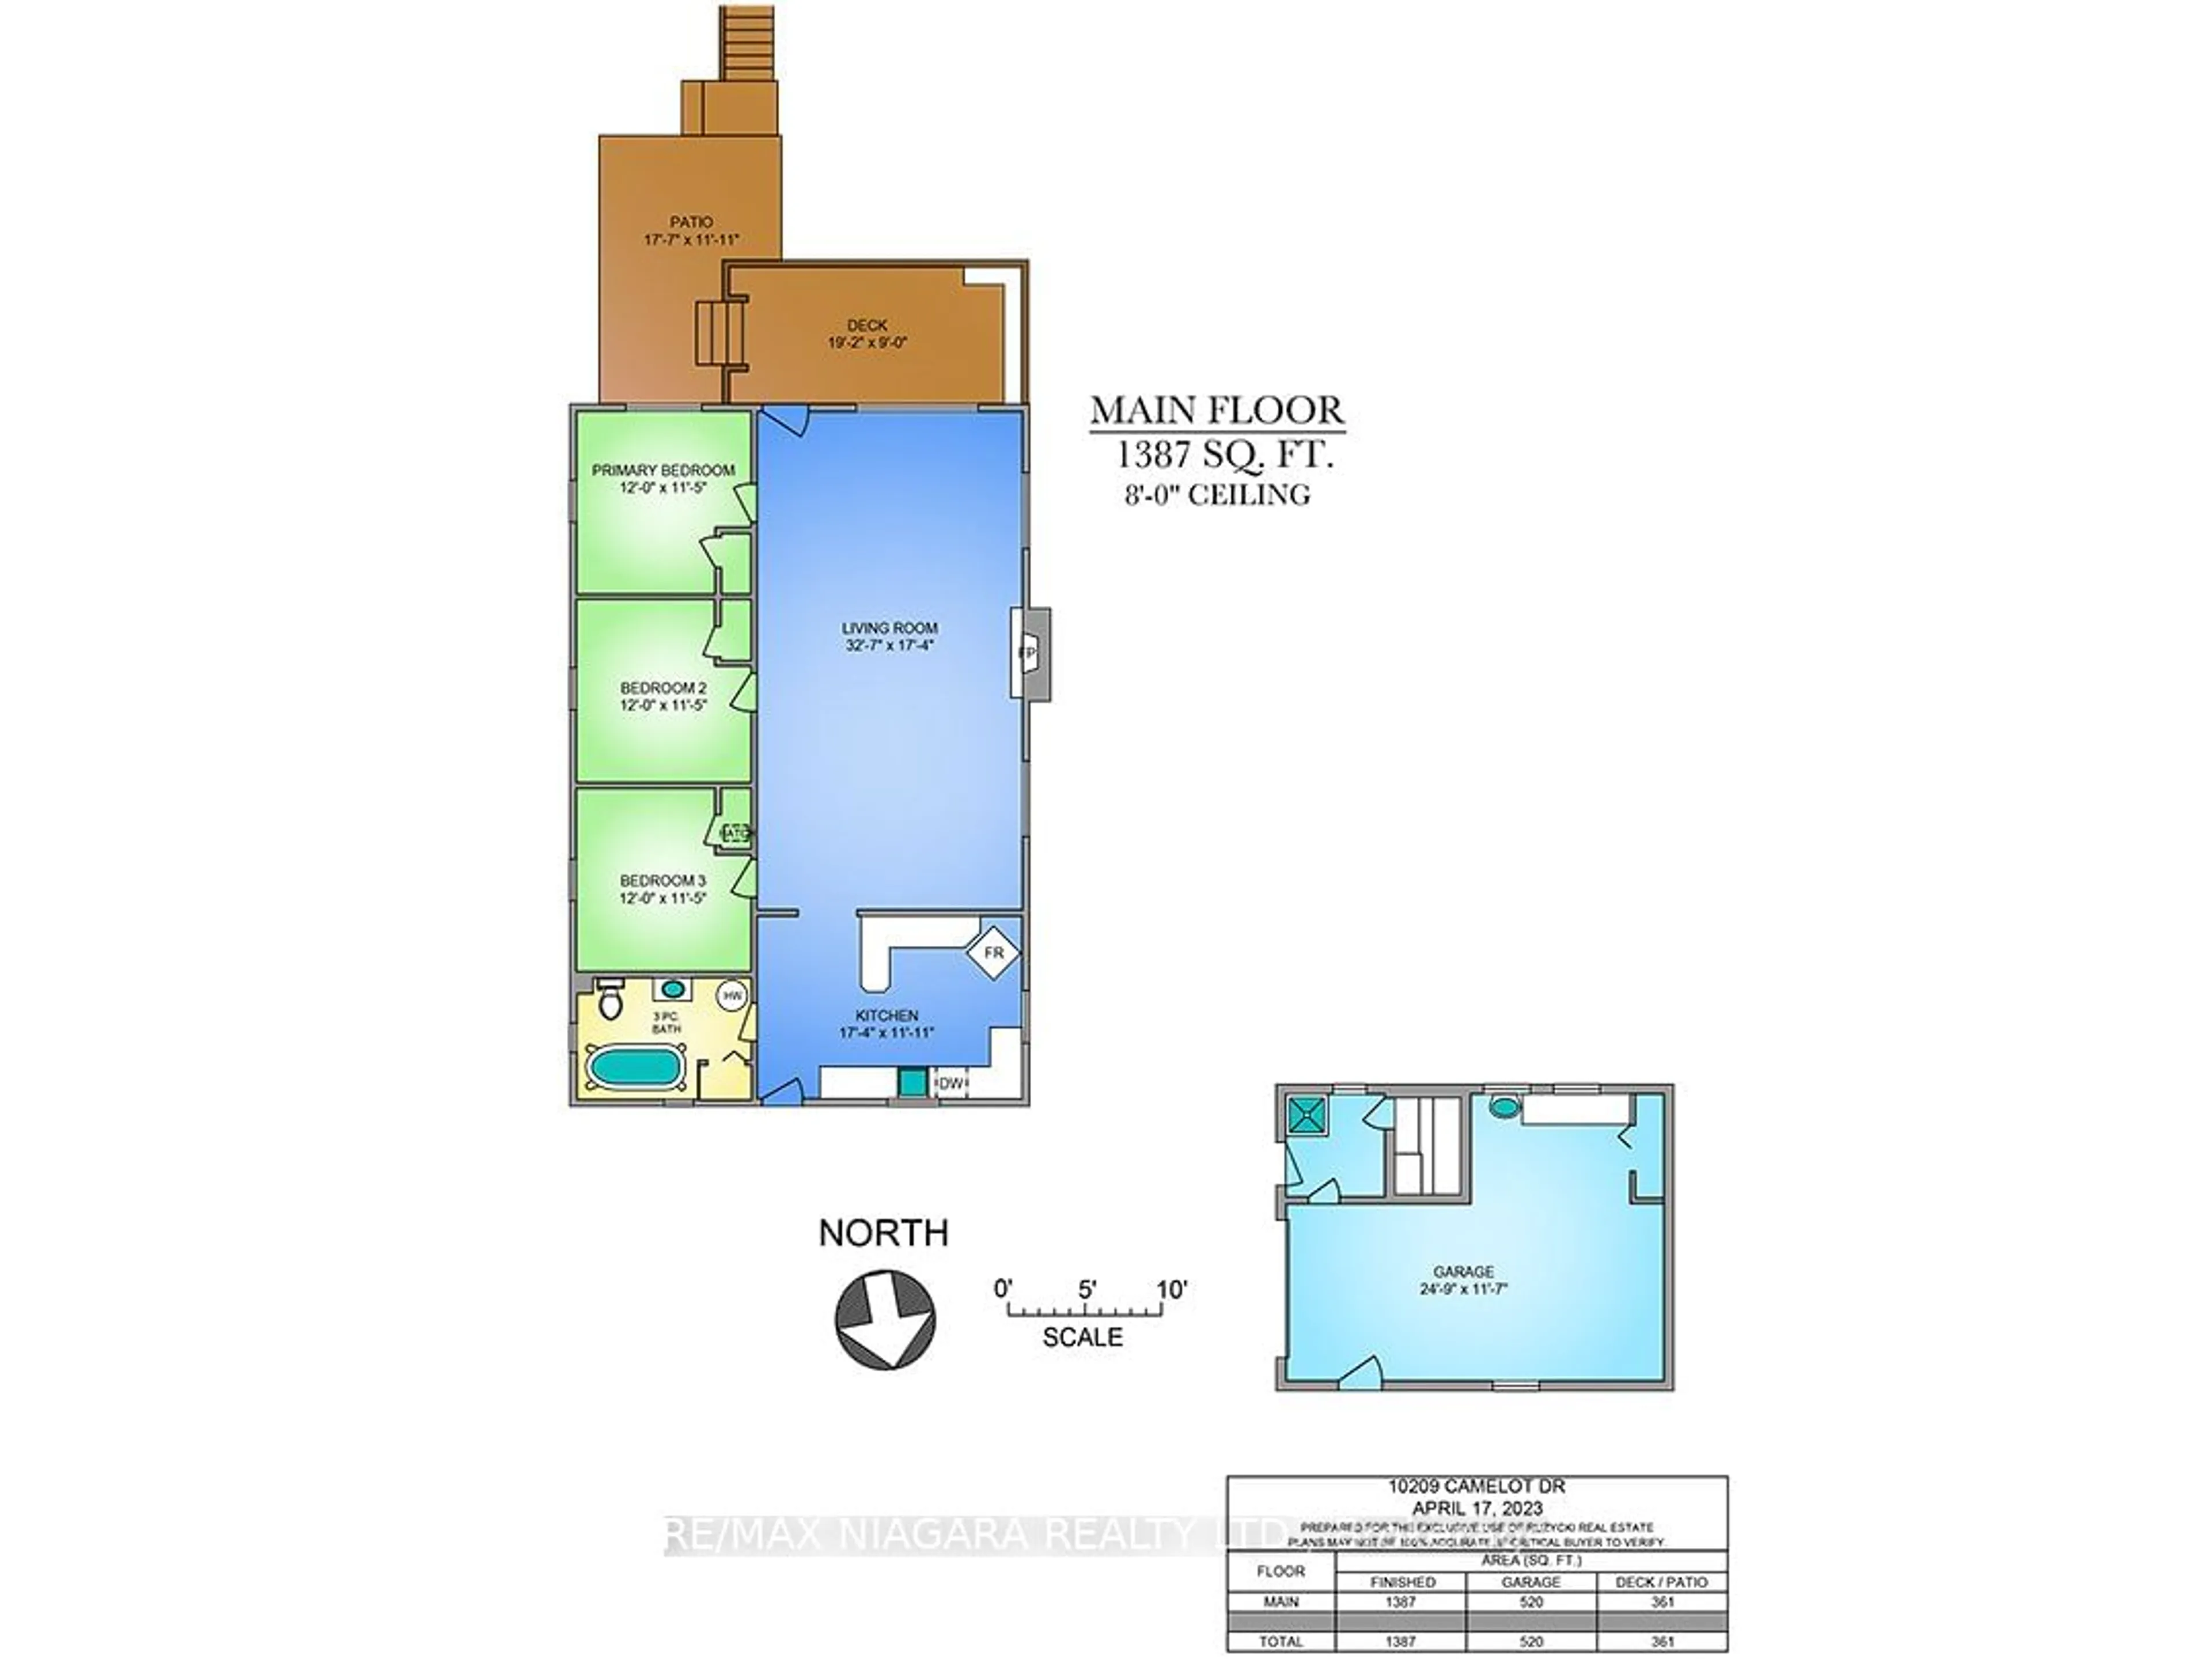 Floor plan for 10209 Camelot Dr, Wainfleet Ontario L3K 5V4